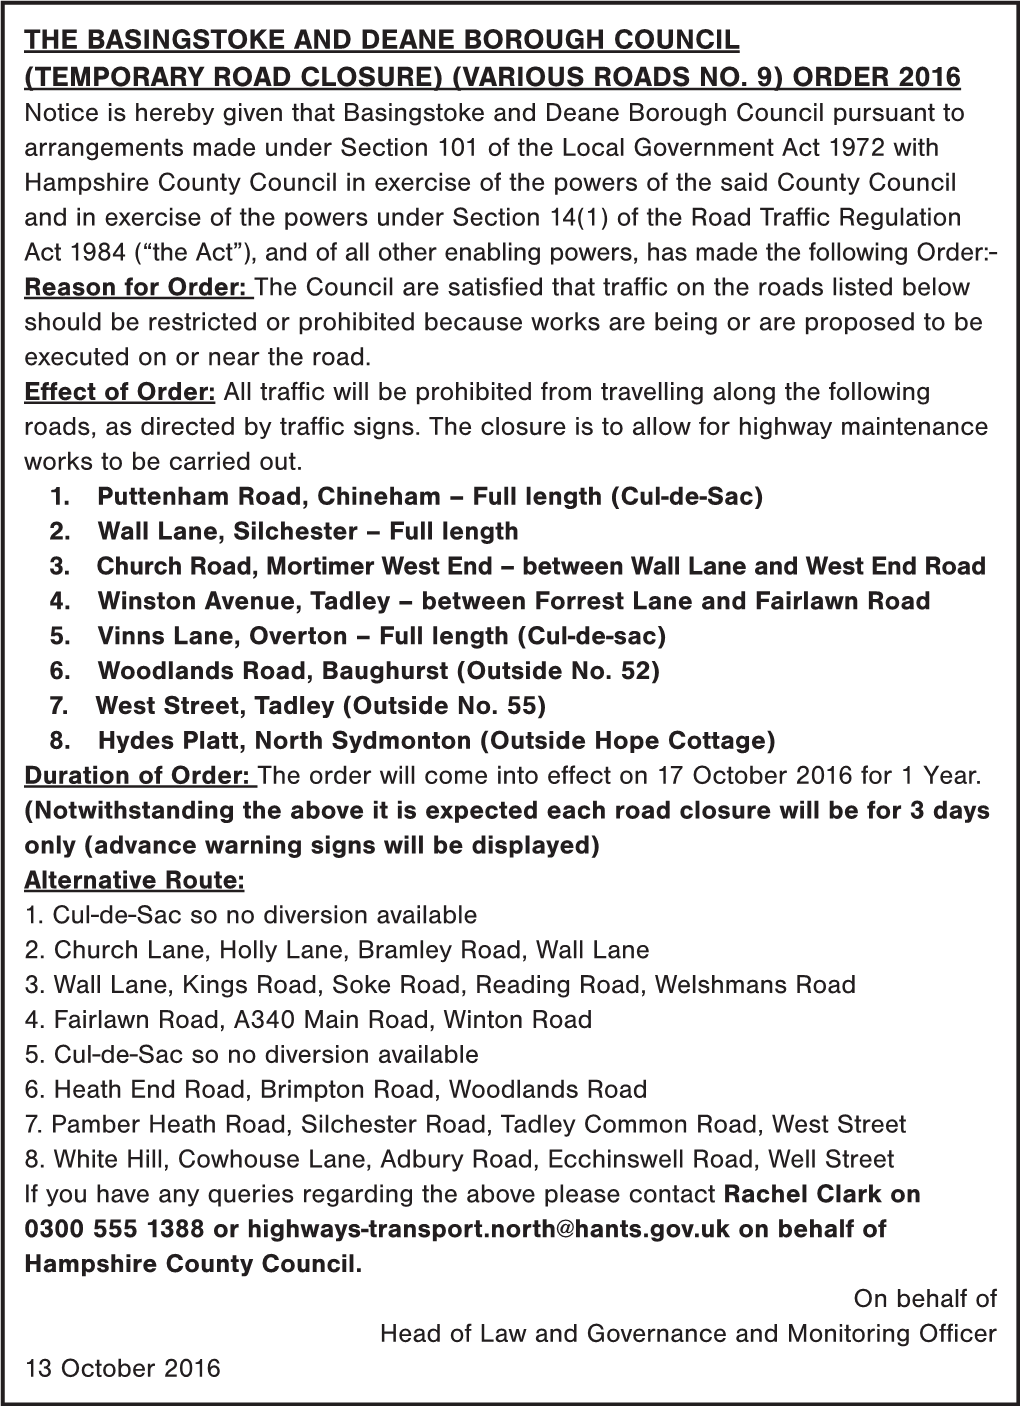 The Basingstoke and Deane Borough Council (Temporary Road Closure) (Various Roads No